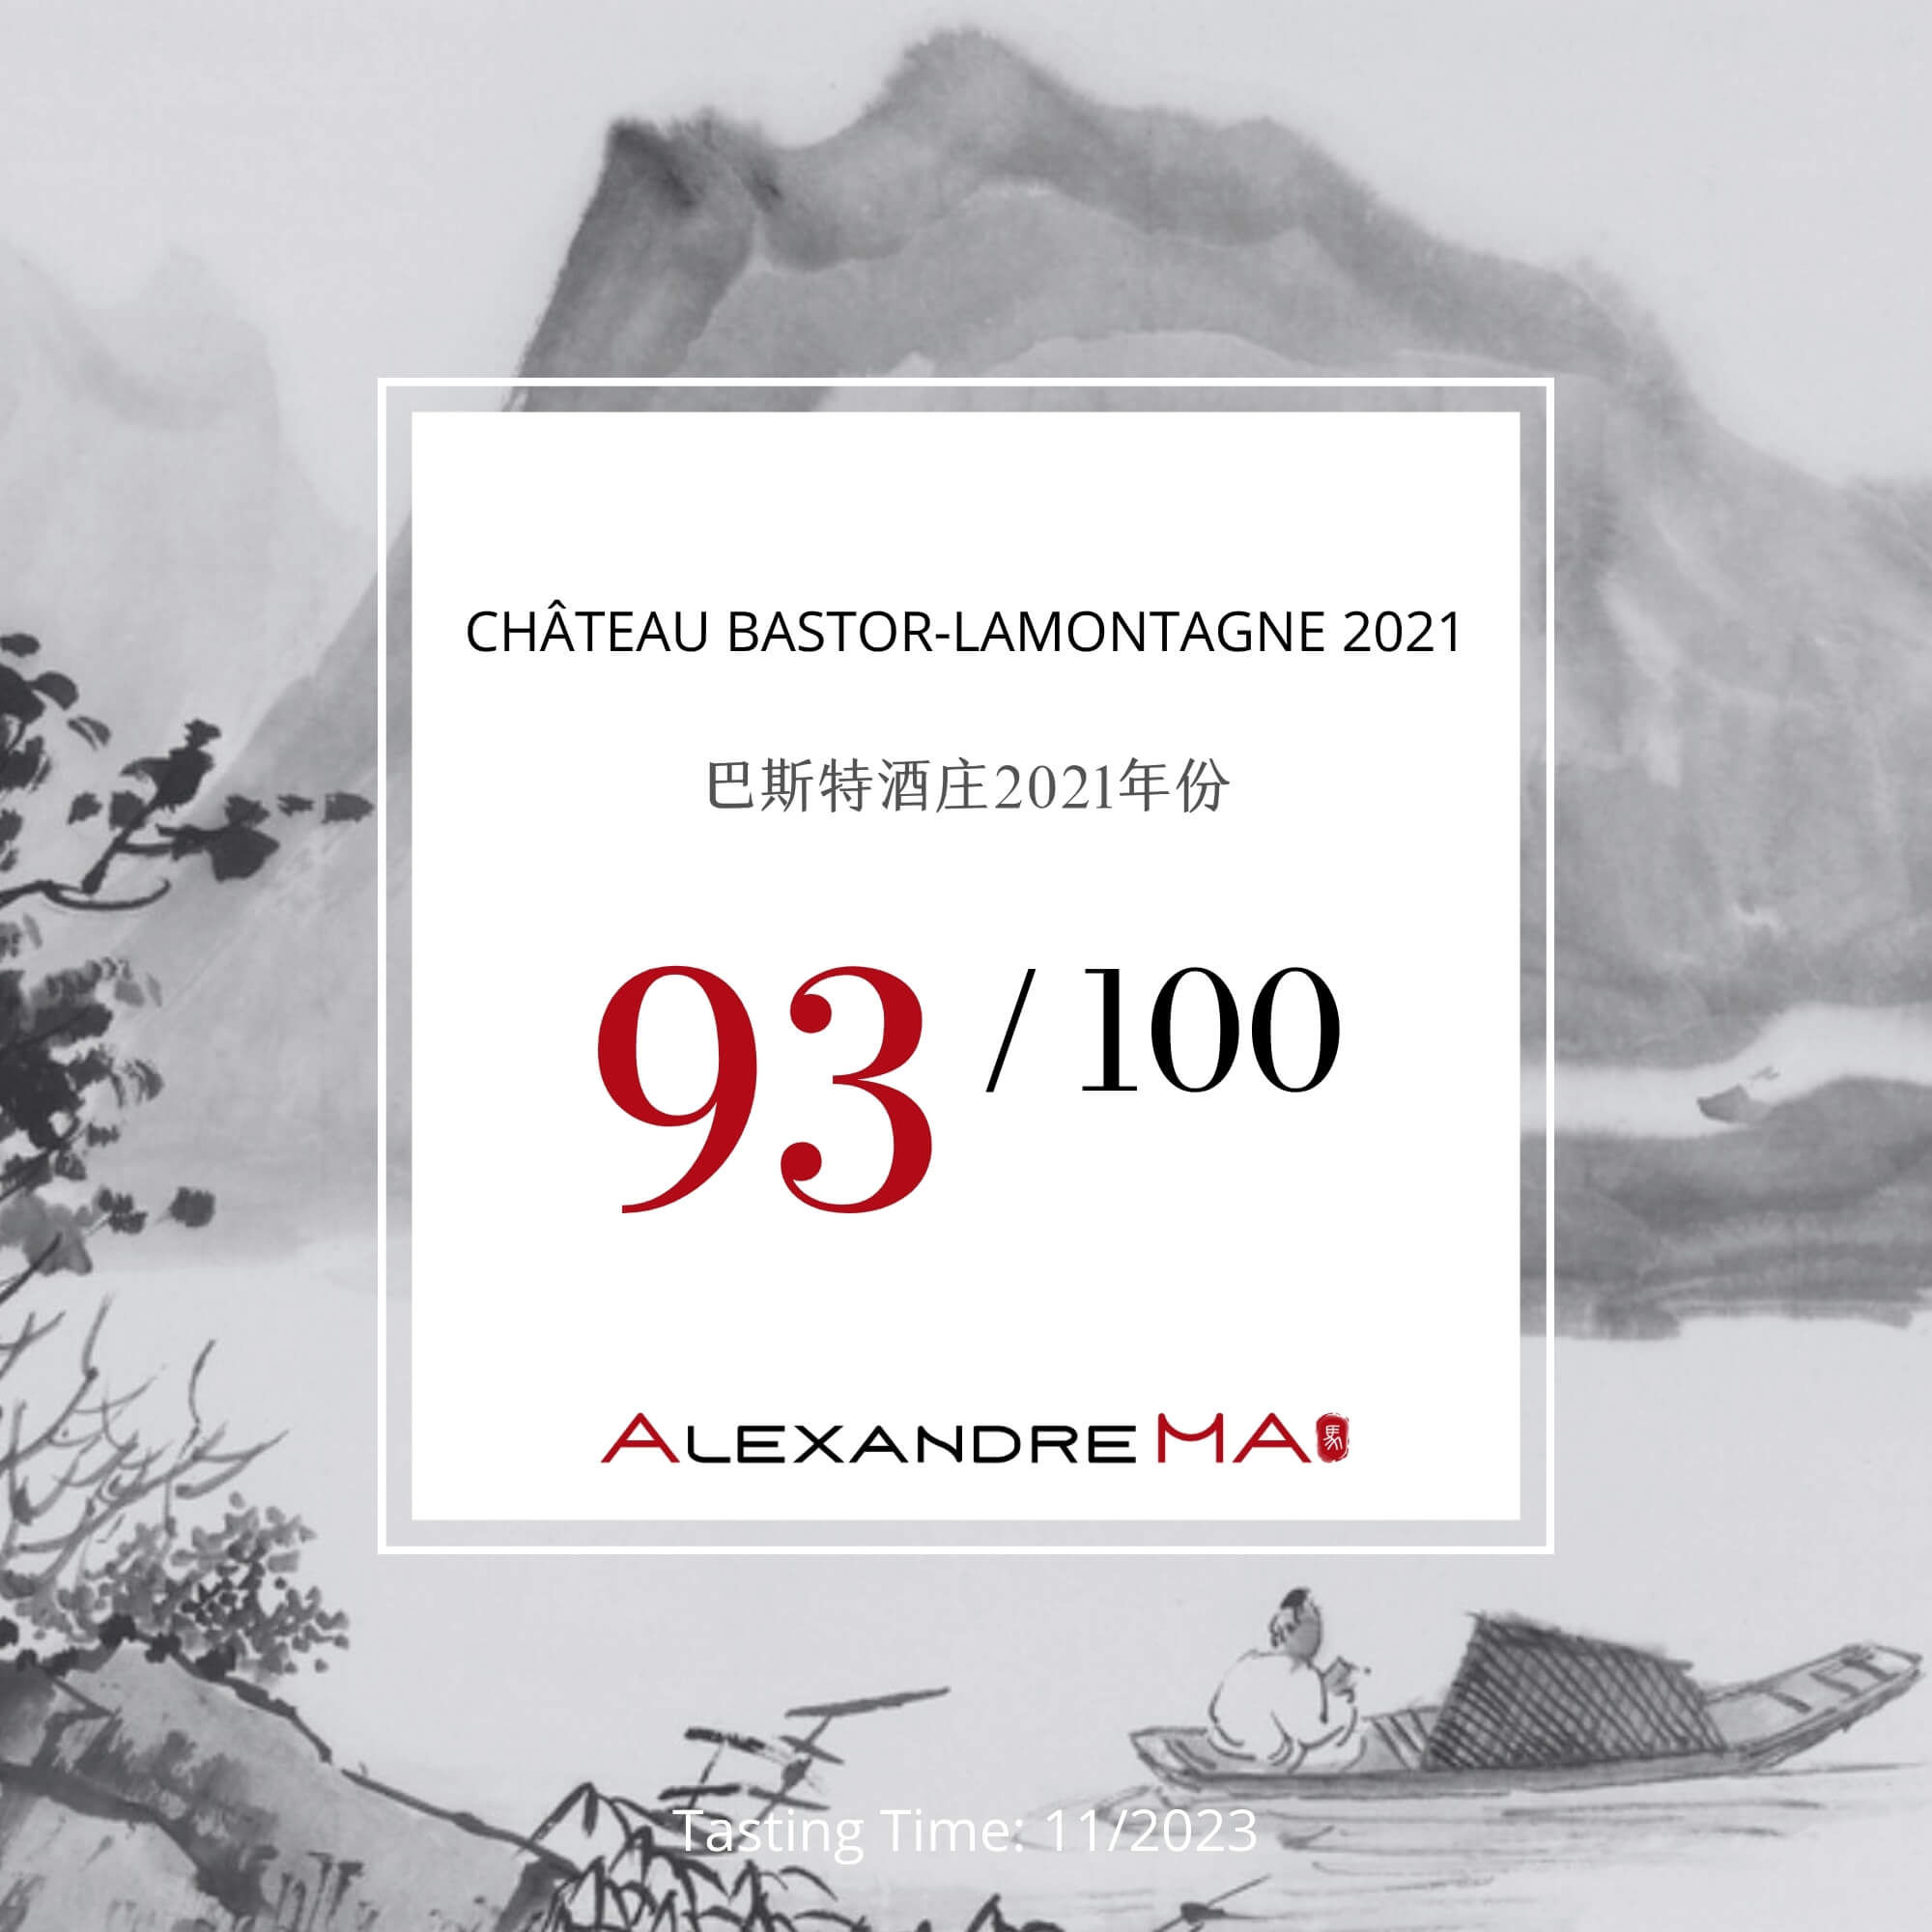 Château Bastor-Lamontagne 2021 - Alexandre MA